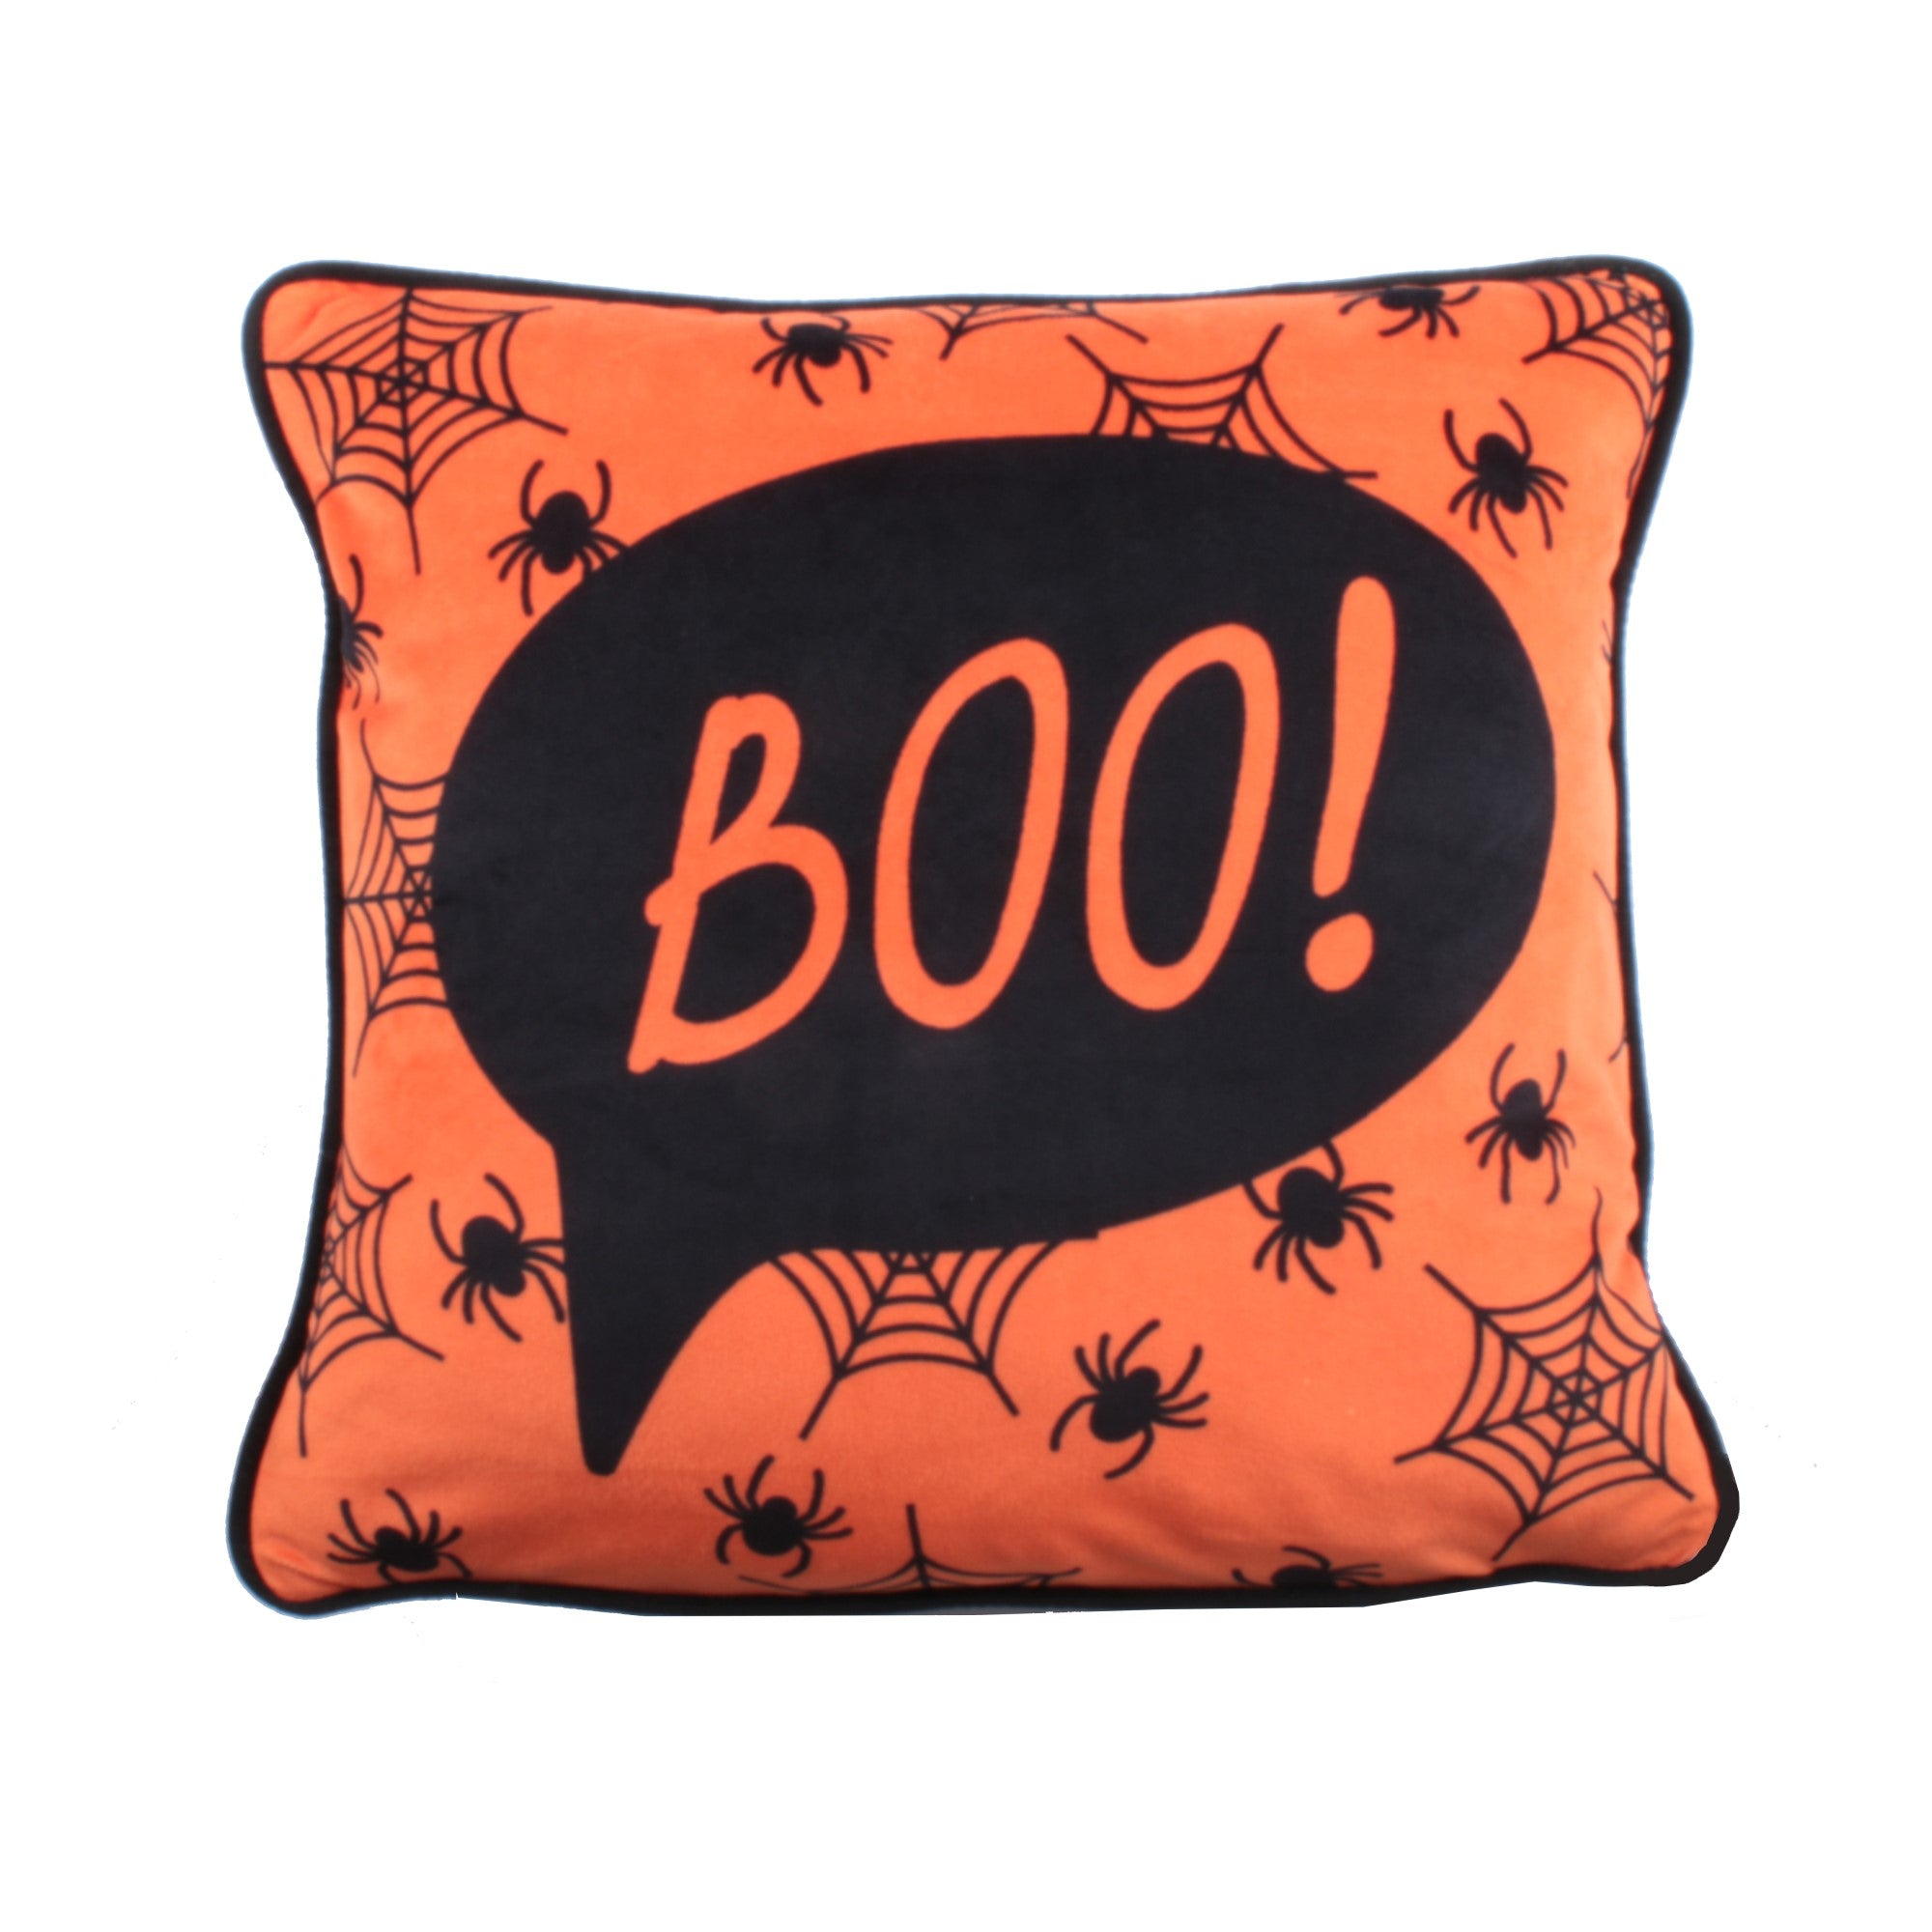 Filled Cushion Halloween Boo by Bedlam in Orange